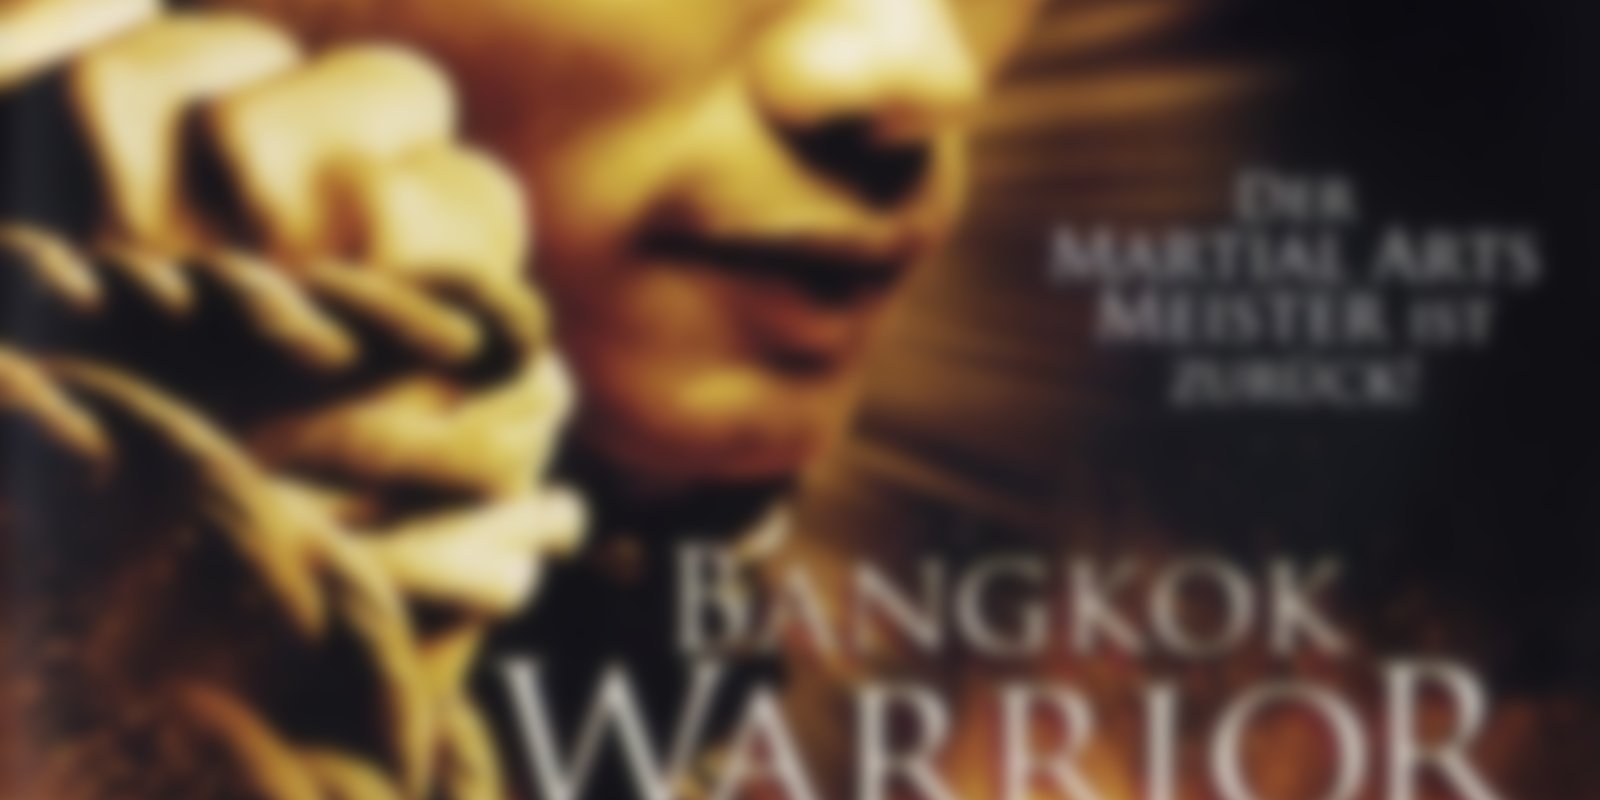 Bangkok Warrior